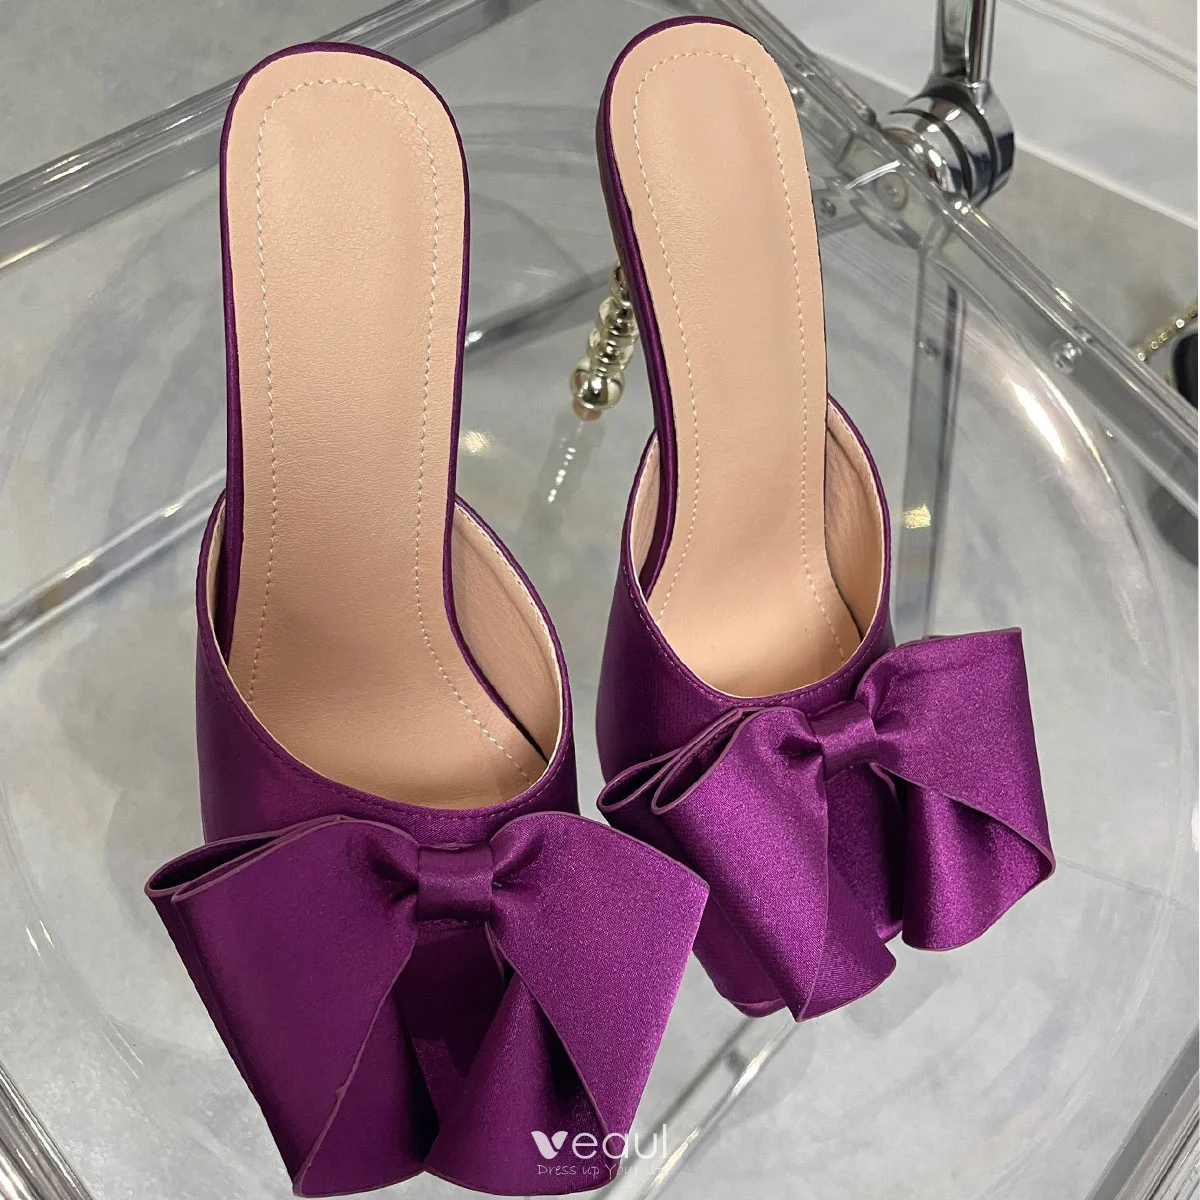 why are my heels purple｜TikTok Search